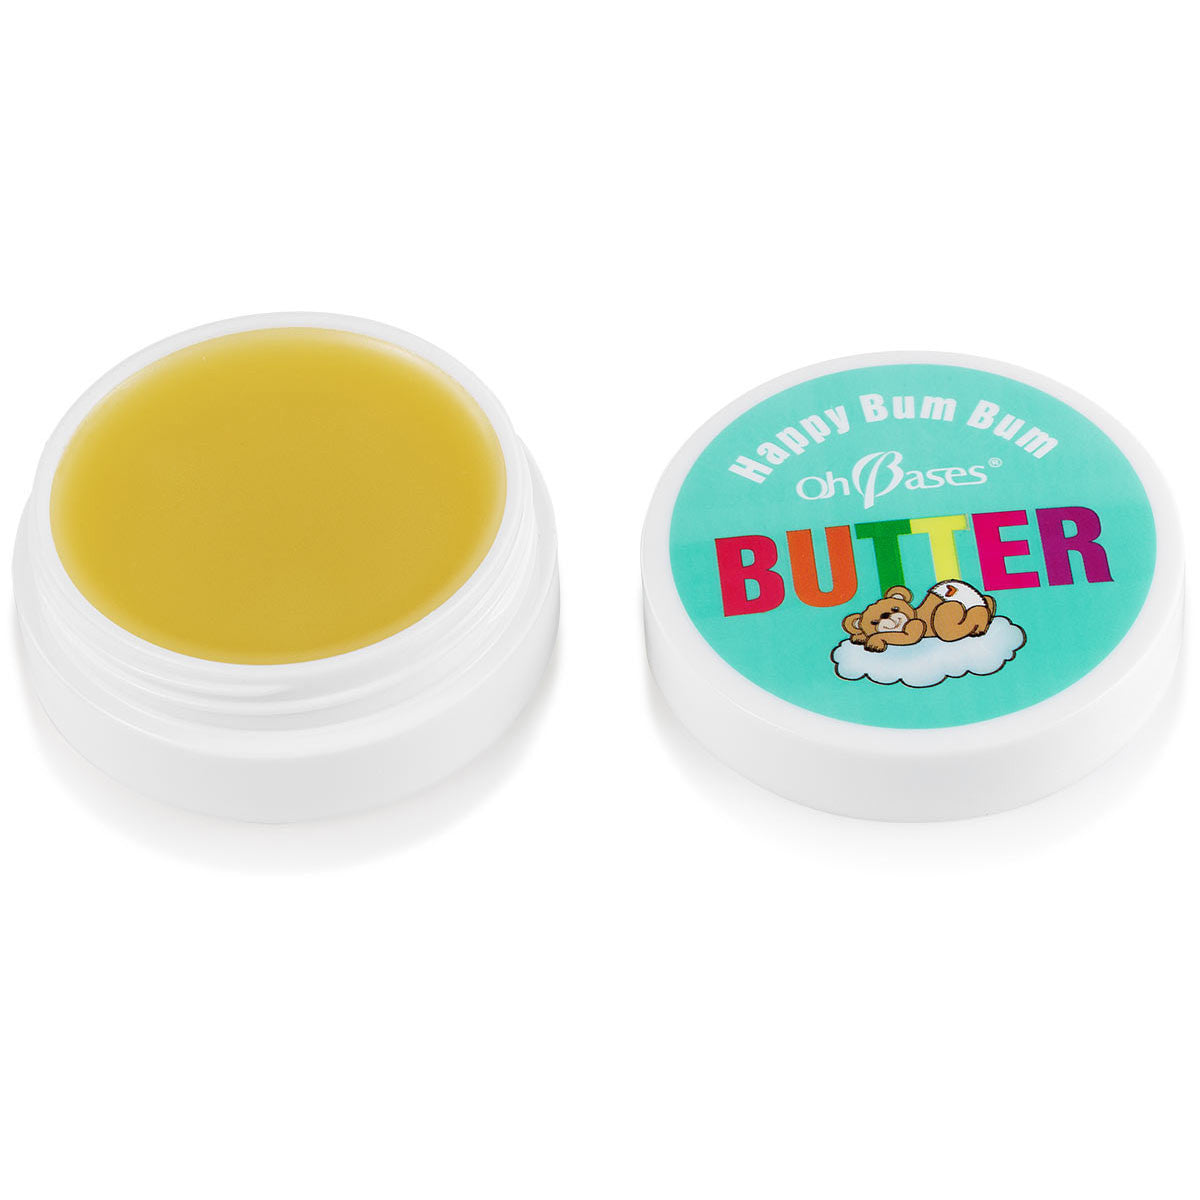 Happy Bum Bum Butter - OhBases